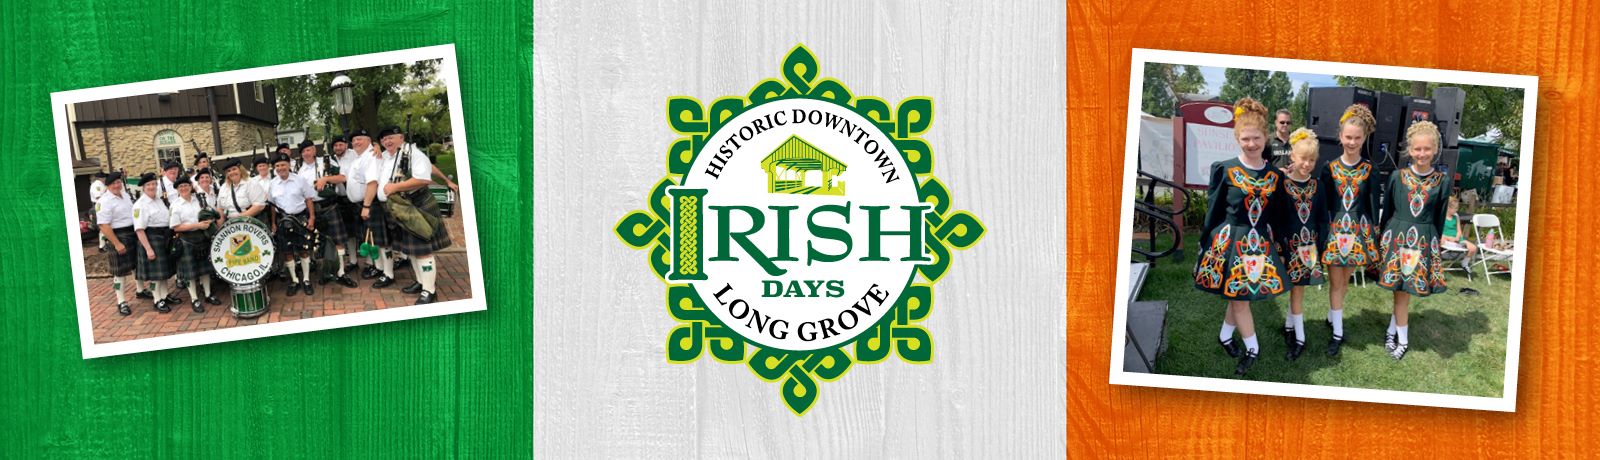 Irish Days 2022 at Historic Downtown Long Grove